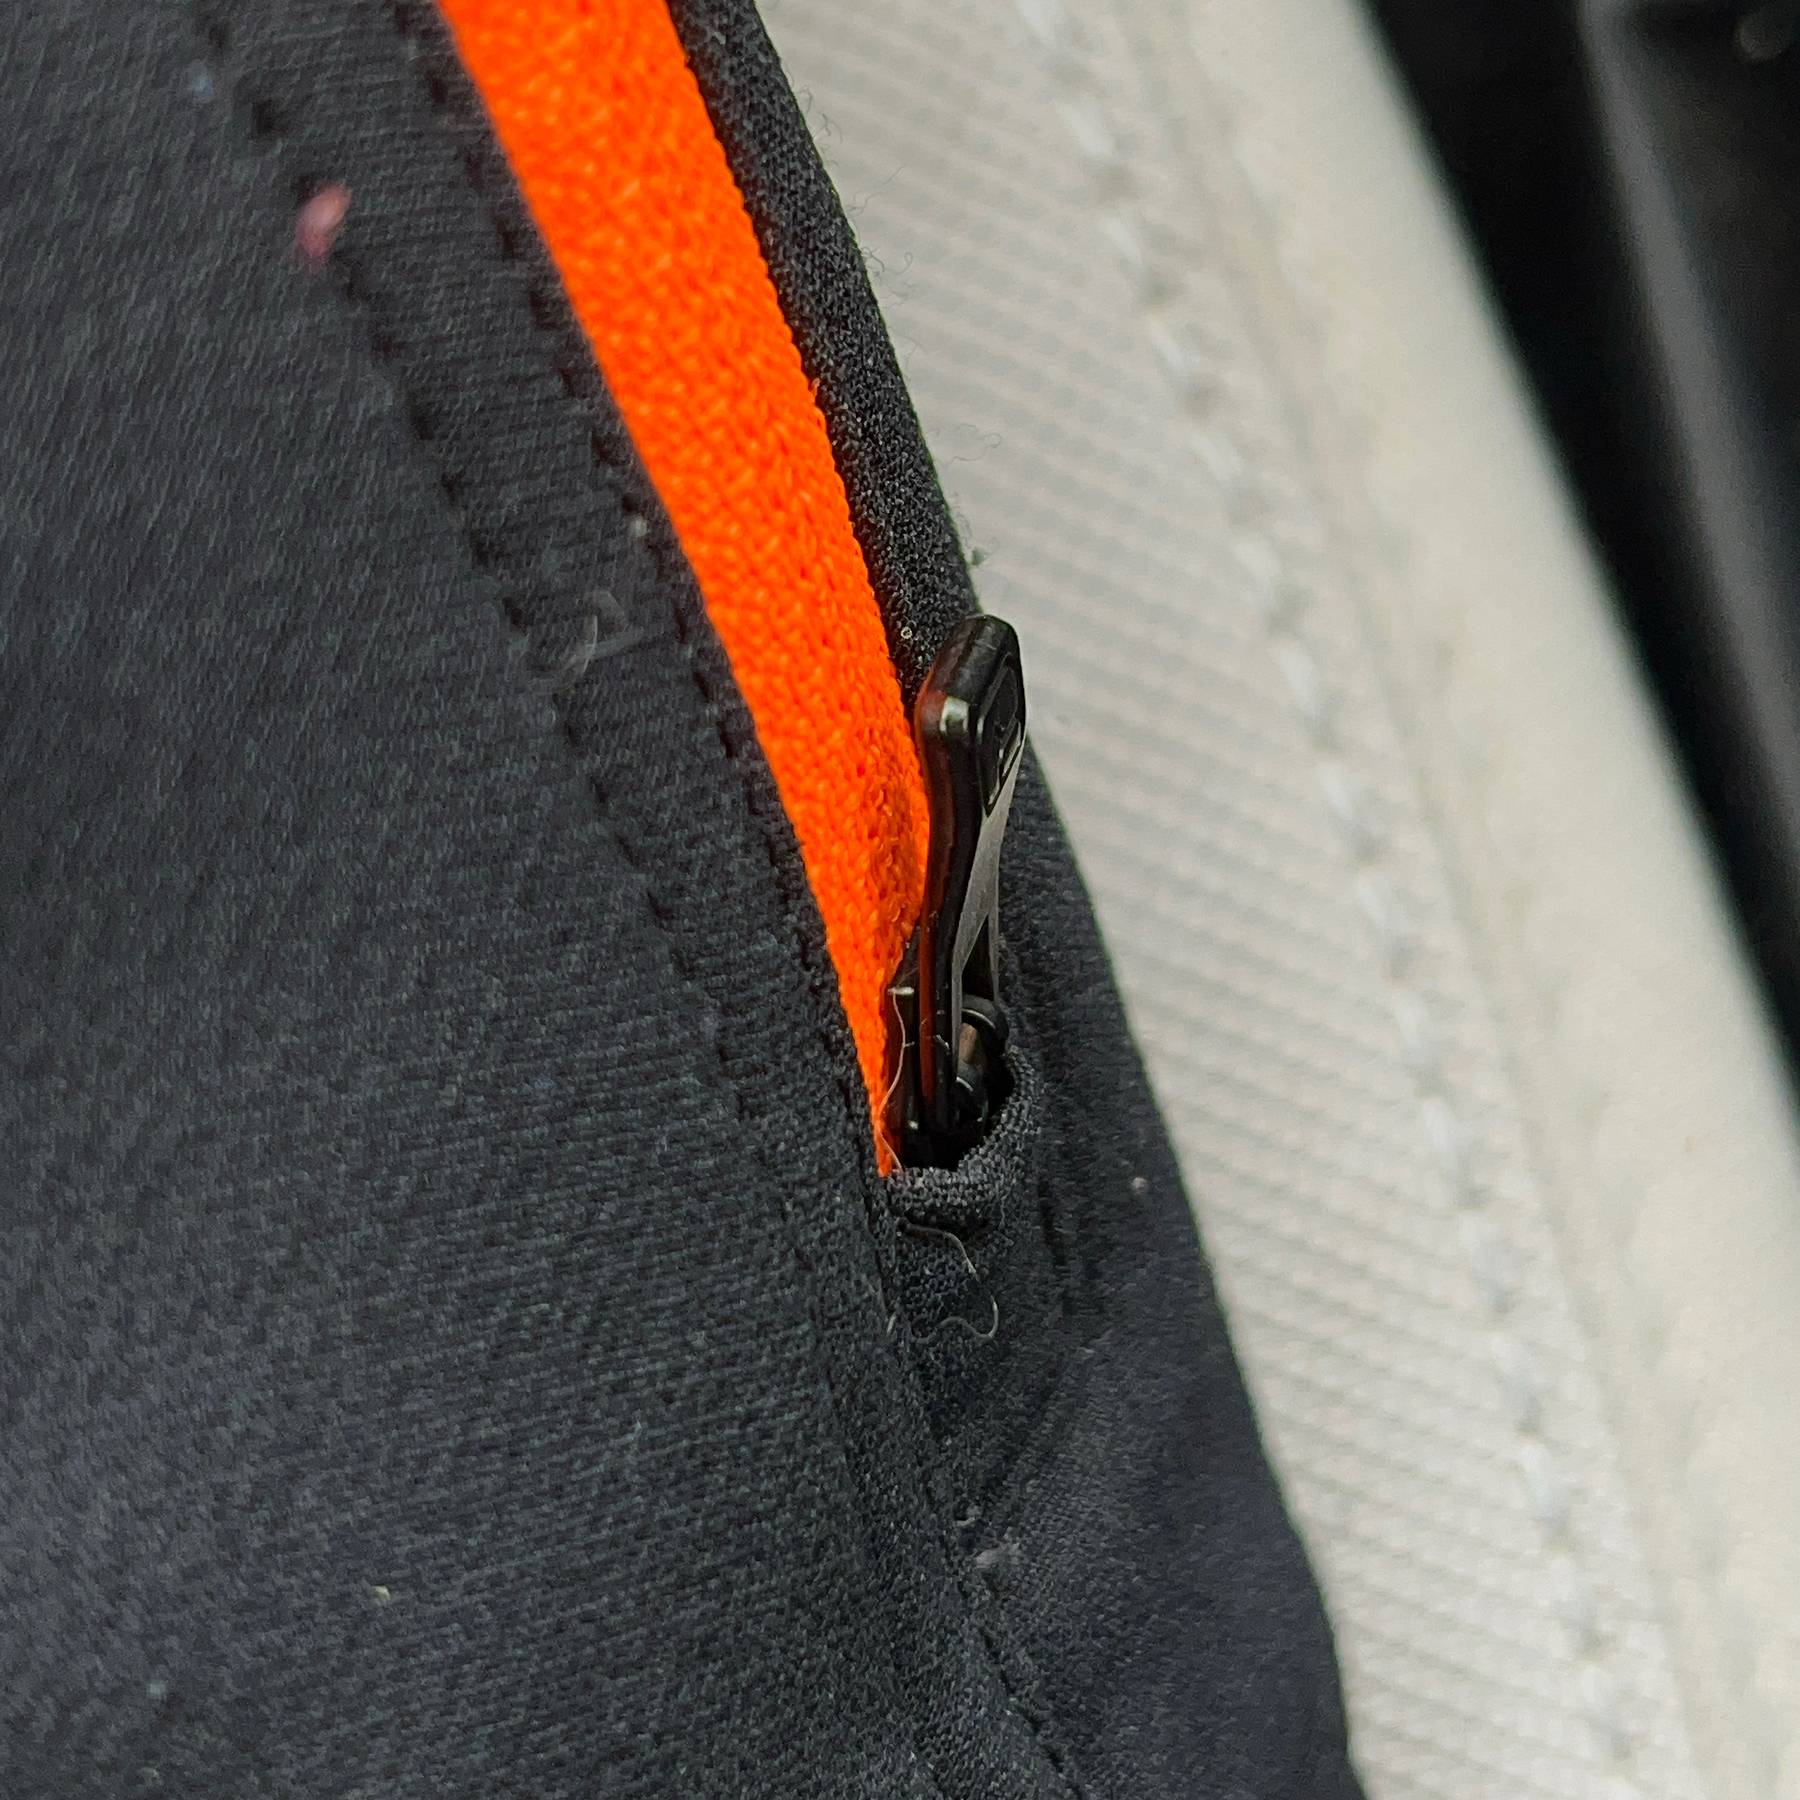 An orange zipper.